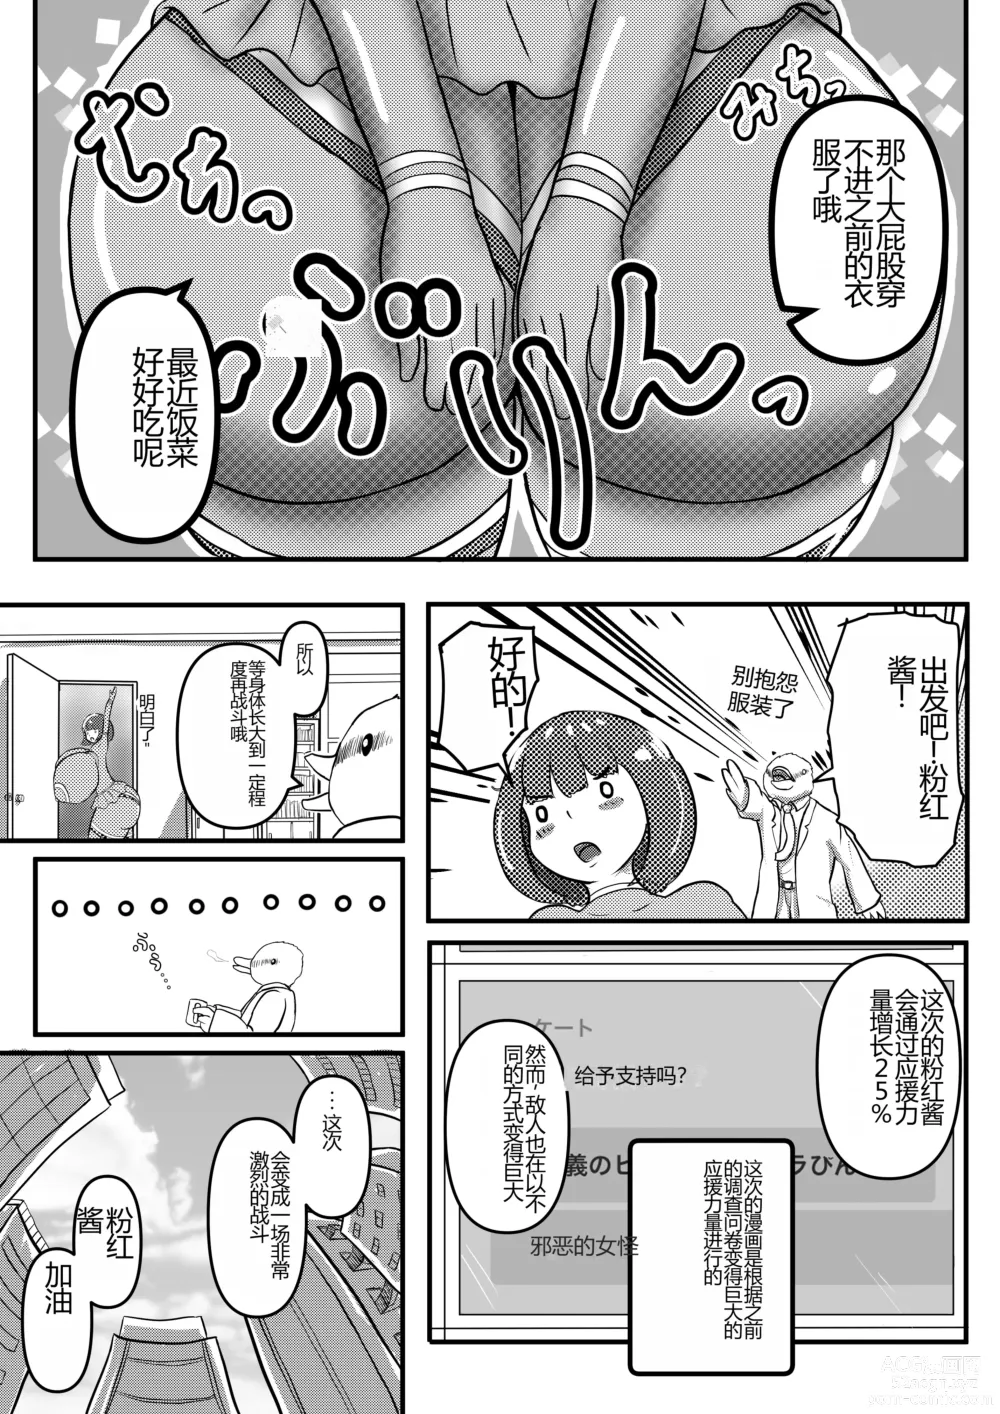 Page 2 of doujinshi Ultra Pink vs Giga Roll